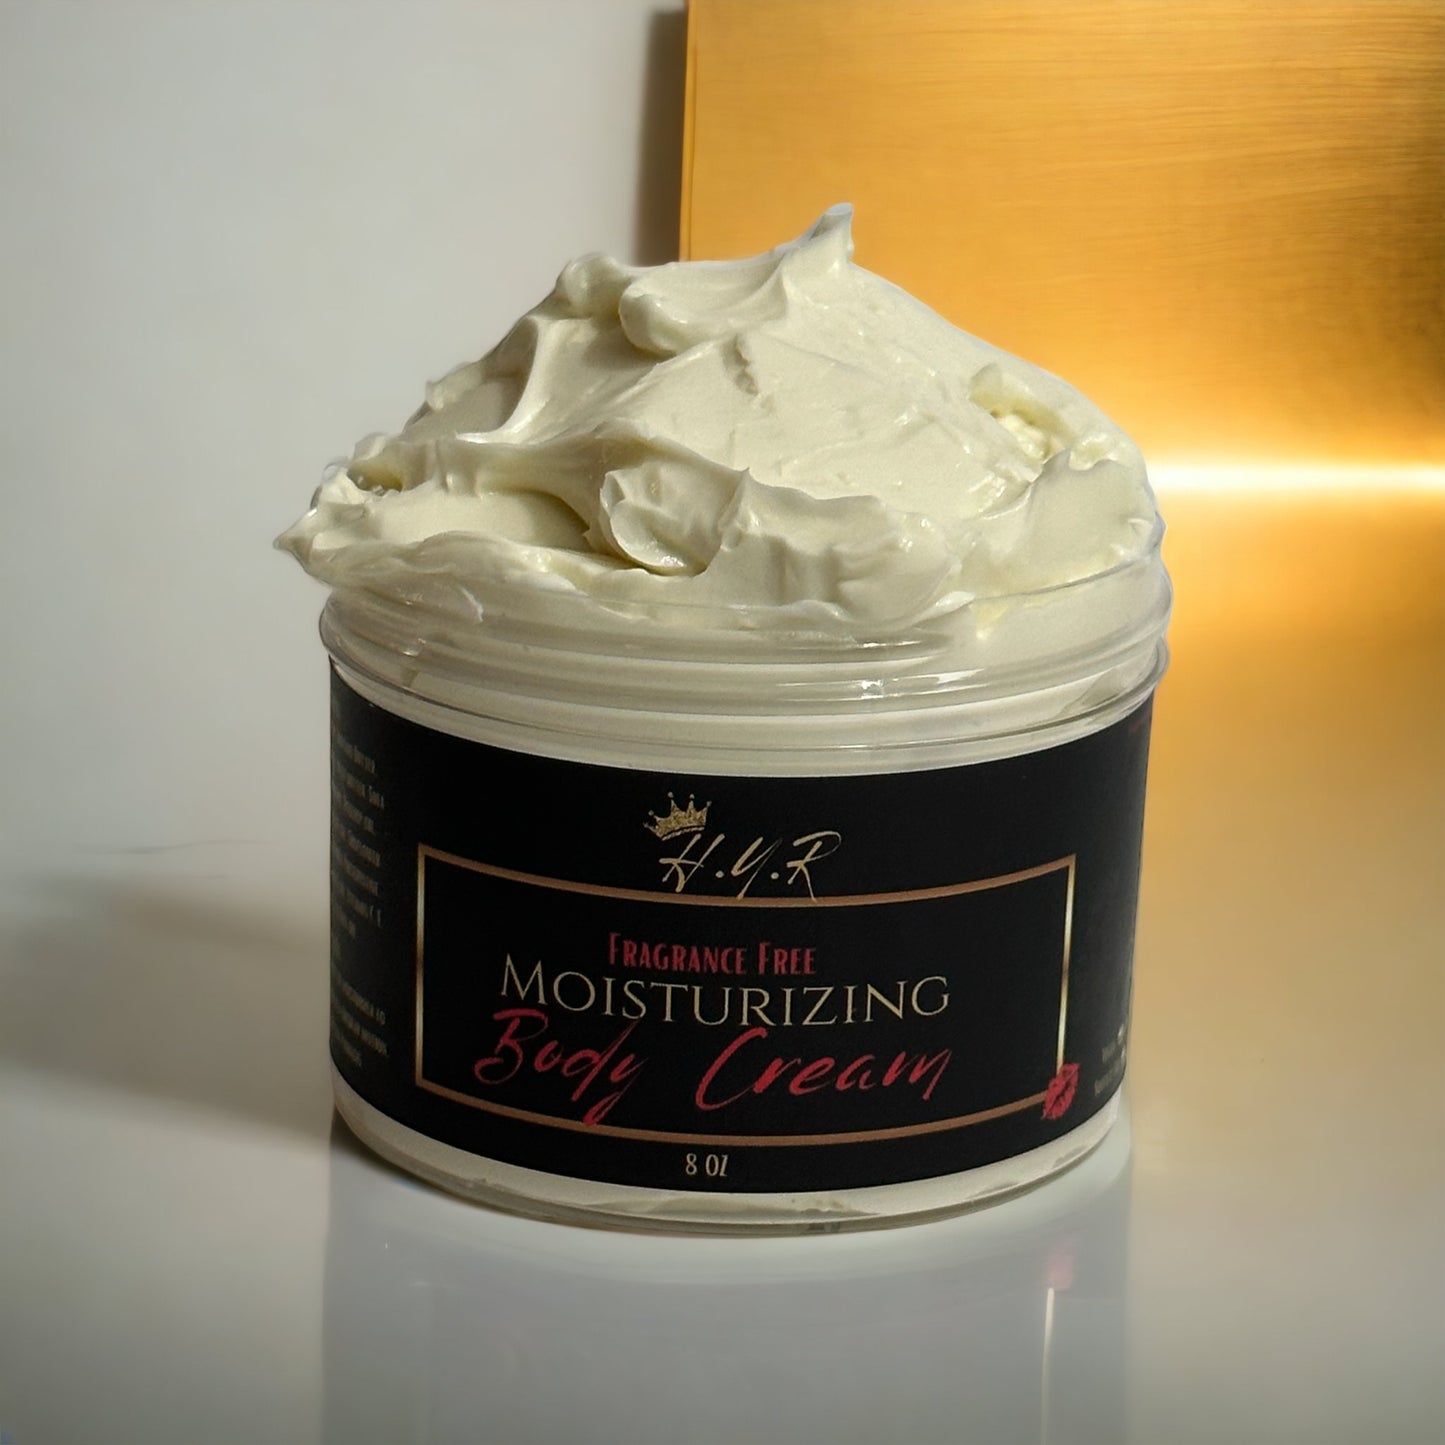 Moisturizing Body Cream (Fragrance Free)